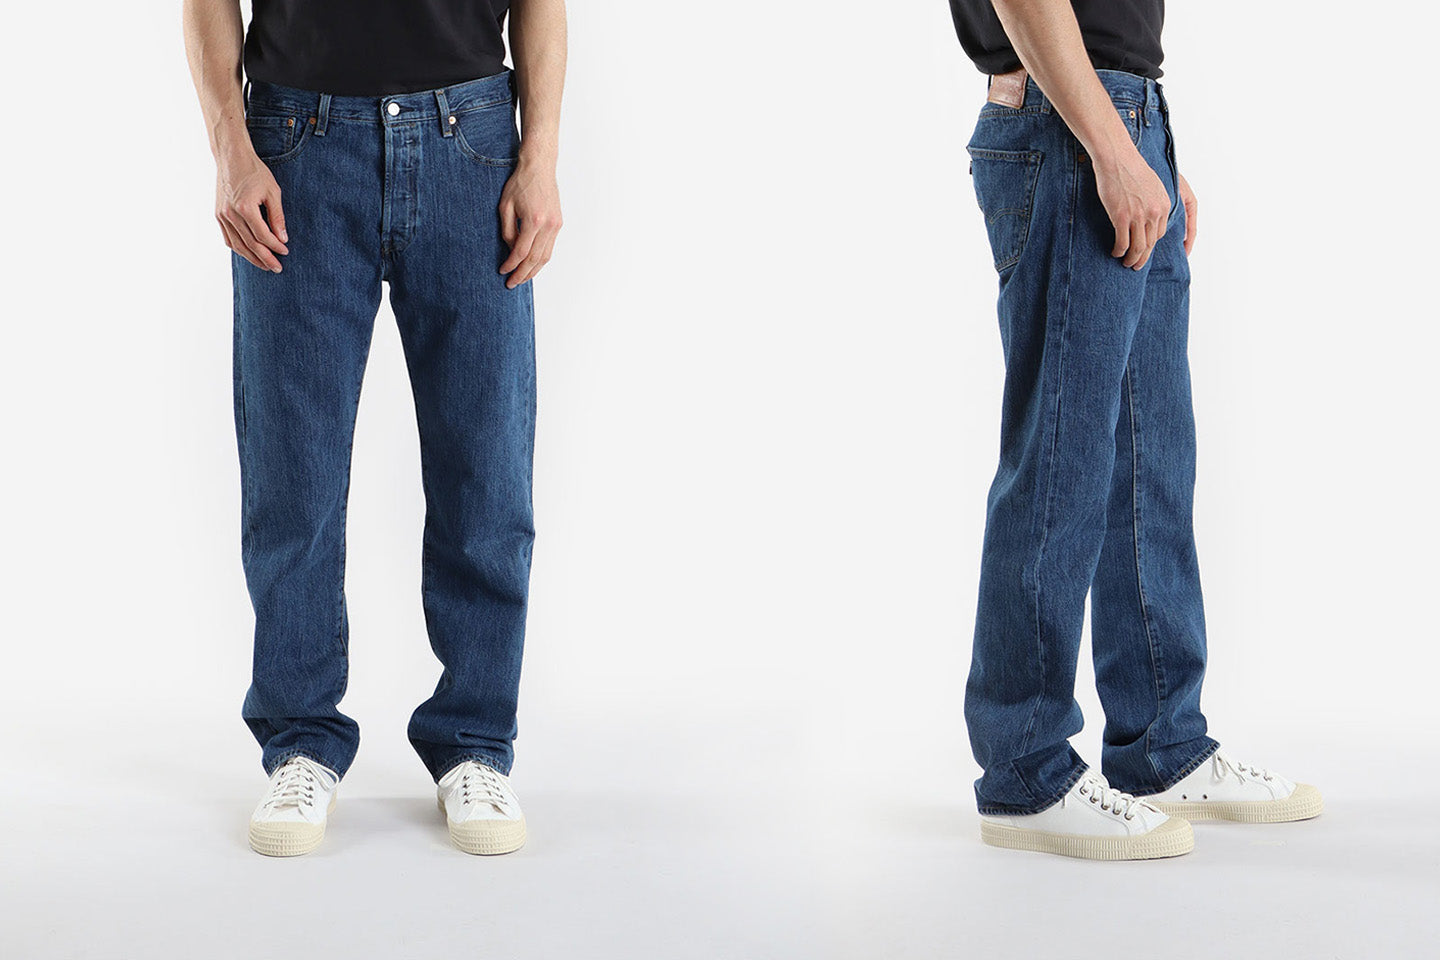 ild Søjle nevø Levi's Fit Guide | How do Levi's Jeans Fit? – Urban Industry